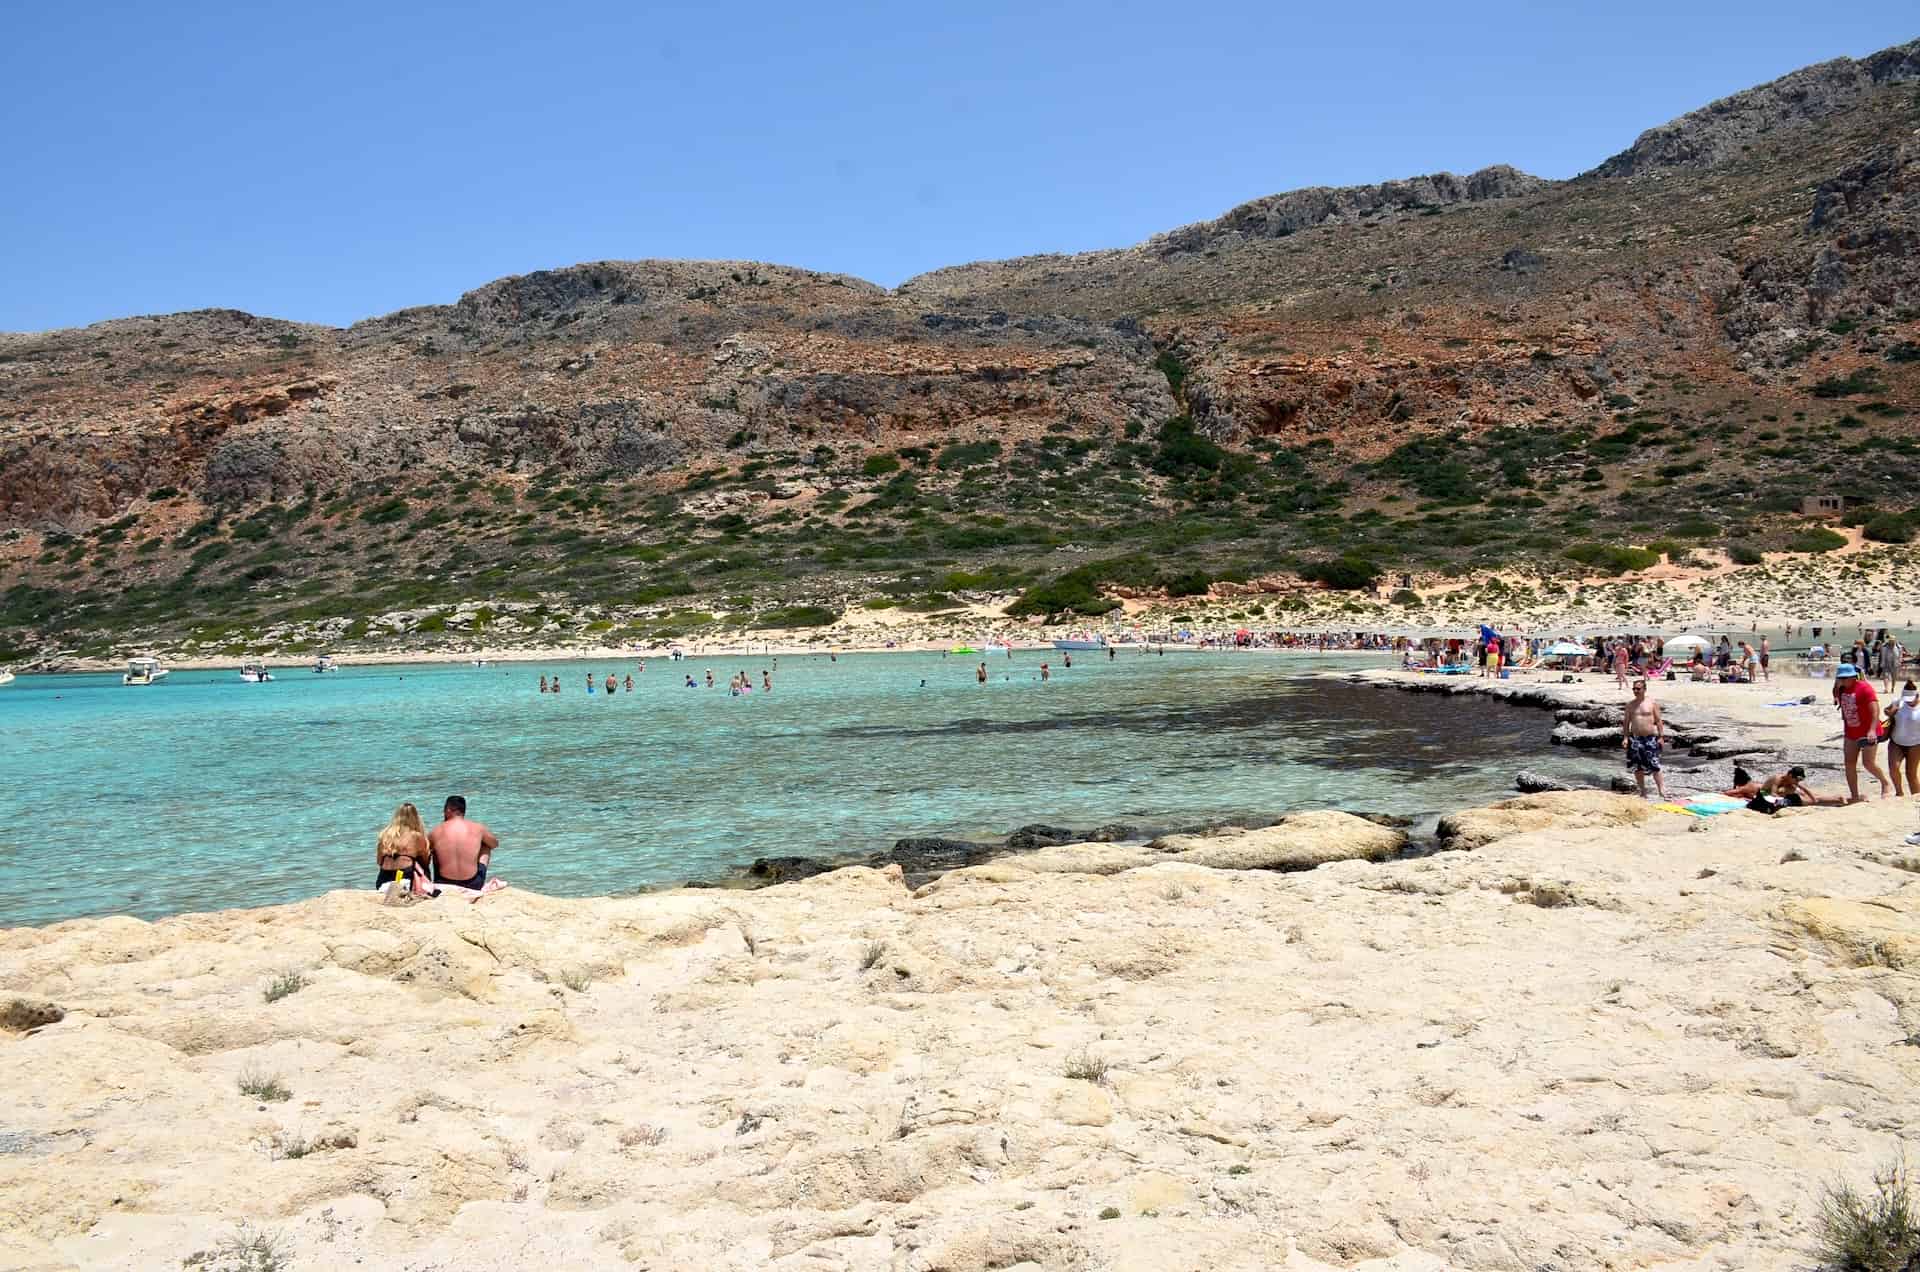 Getting close to Balos Beach, Crete